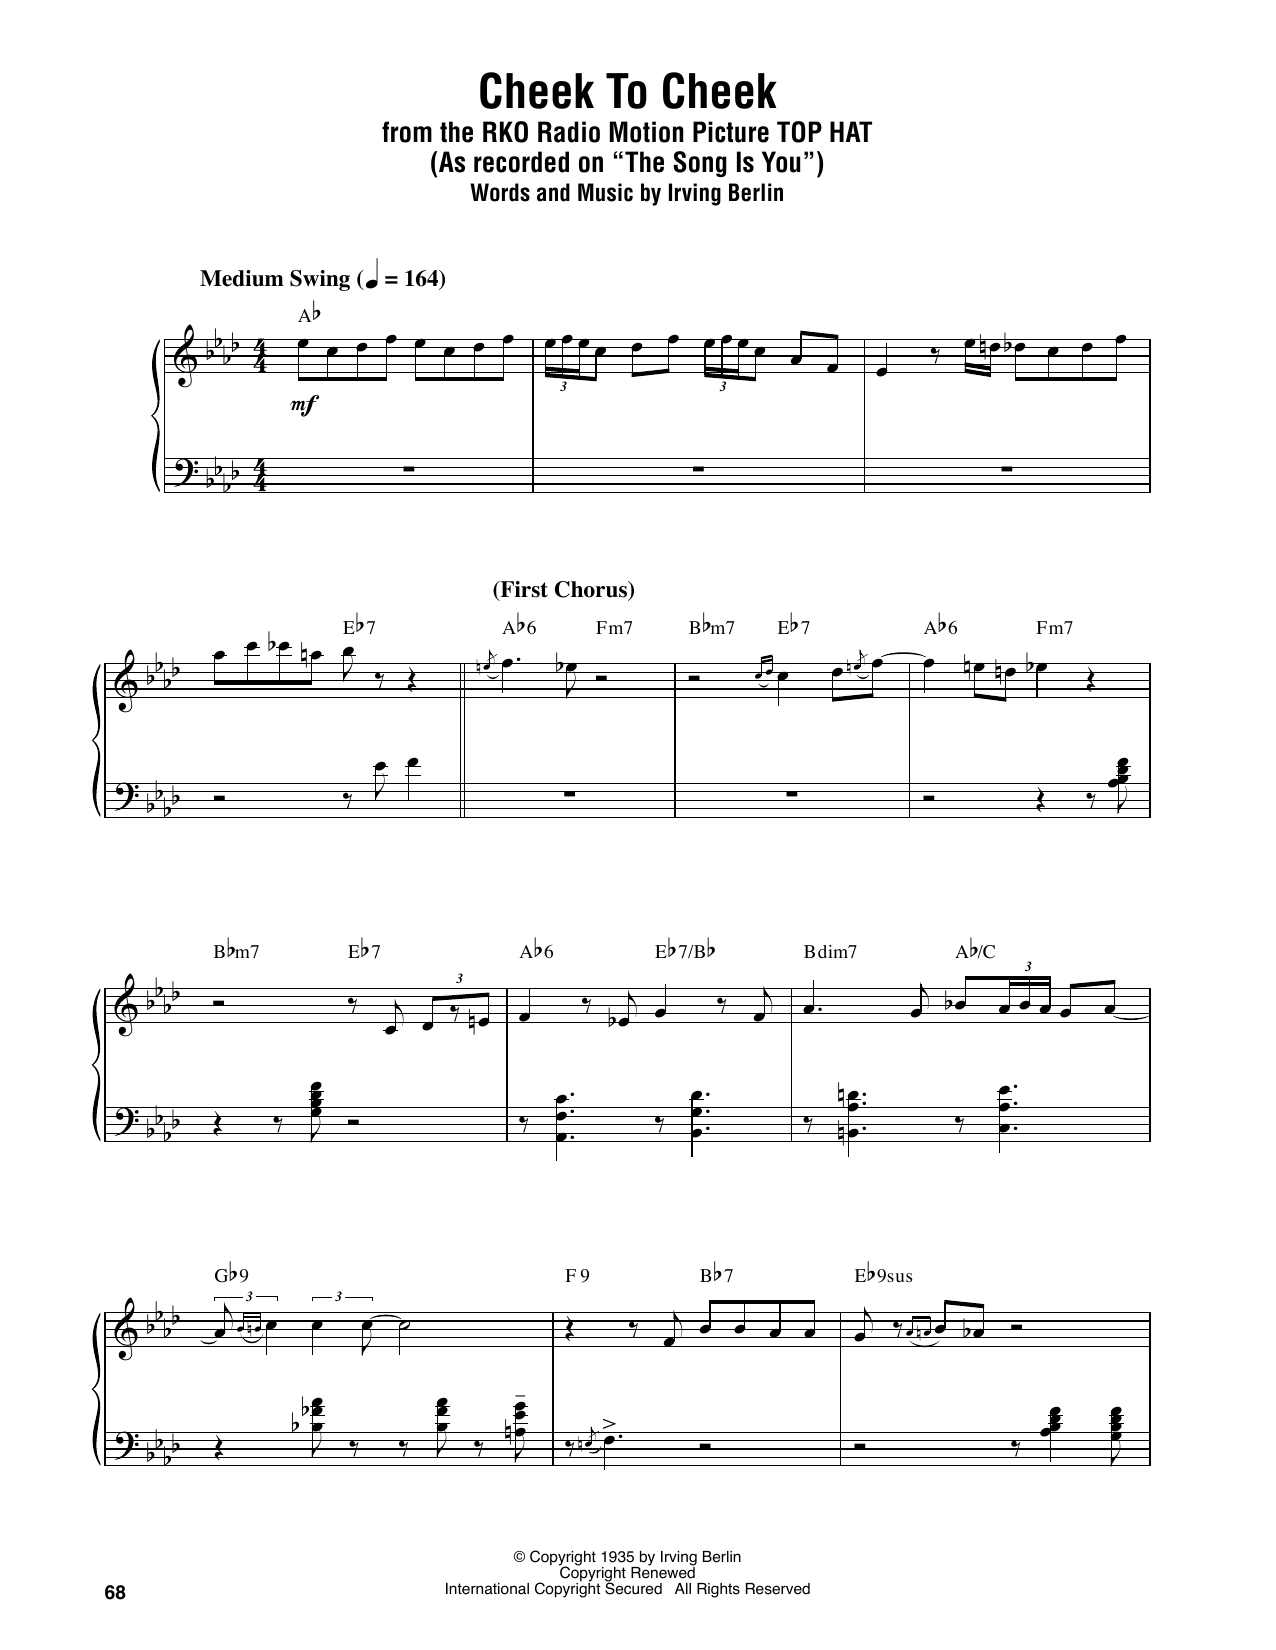 Oscar Peterson Cheek To Cheek Sheet Music Notes Chords Piano Transcription Download Jazz Pdf